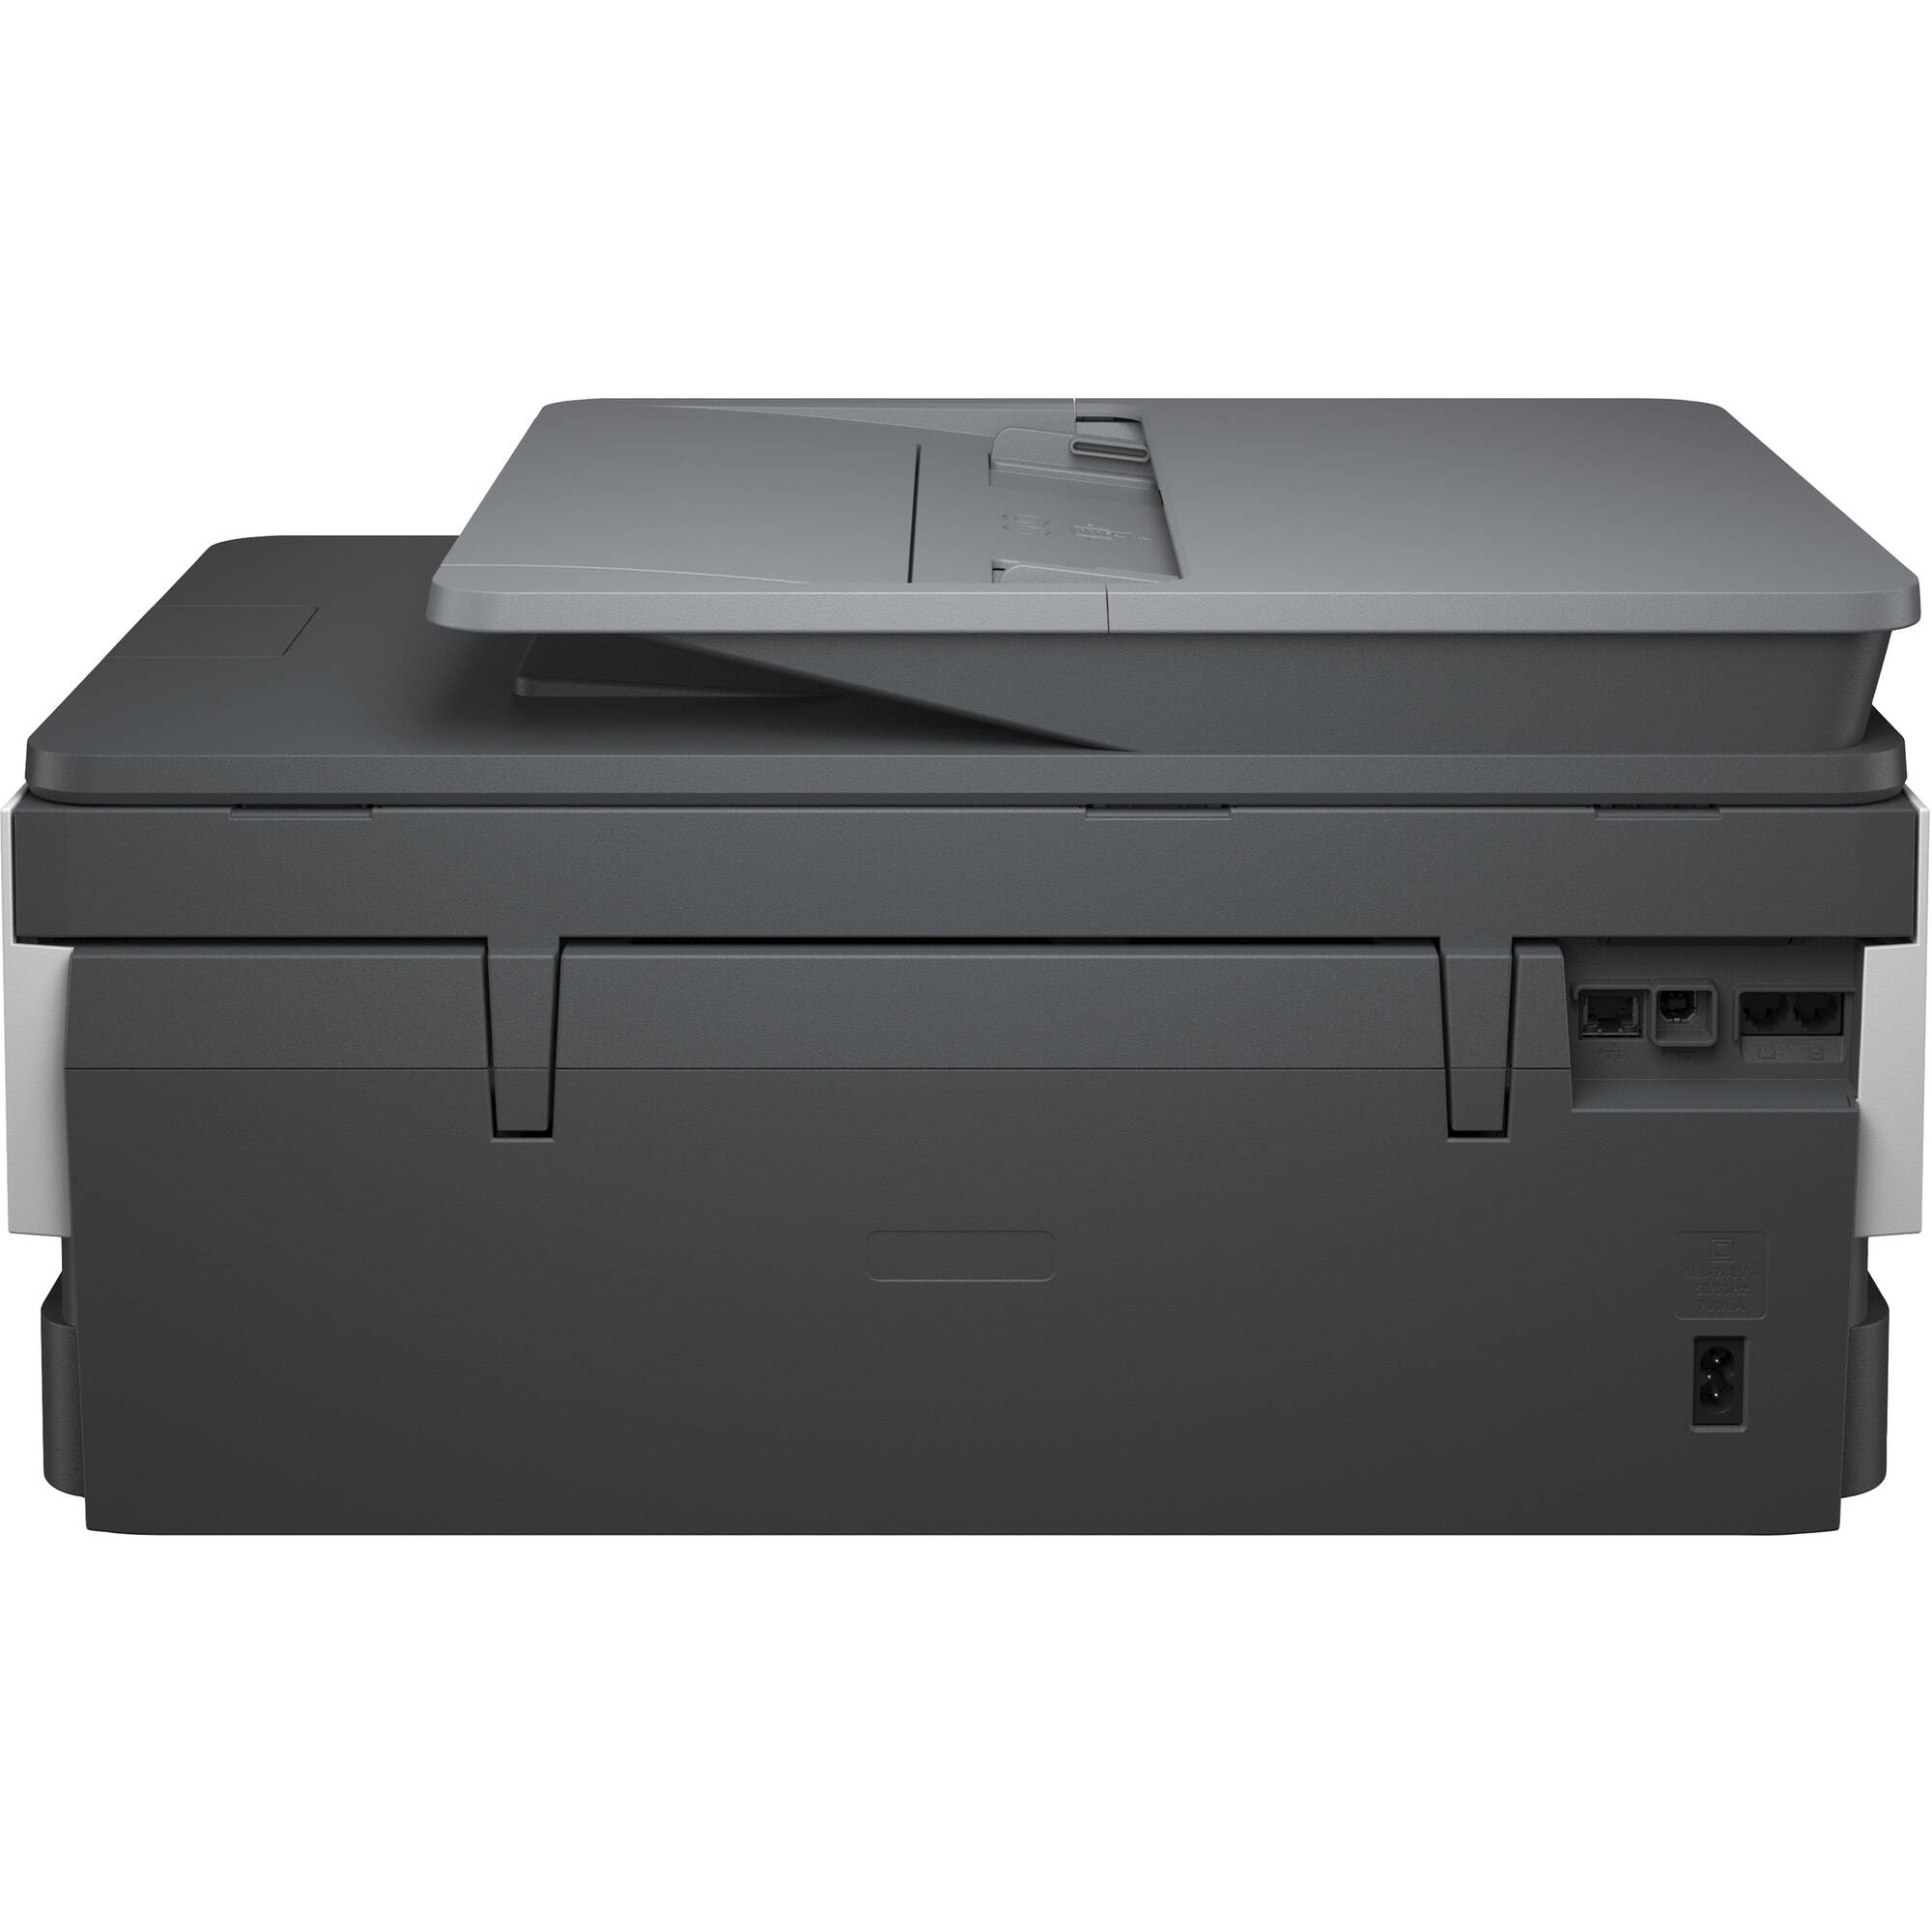 HP HP-OJPRO8035E-B-RB OfficeJet Pro 8035 All-in-One Printer, Basalt - Certified Refurbished